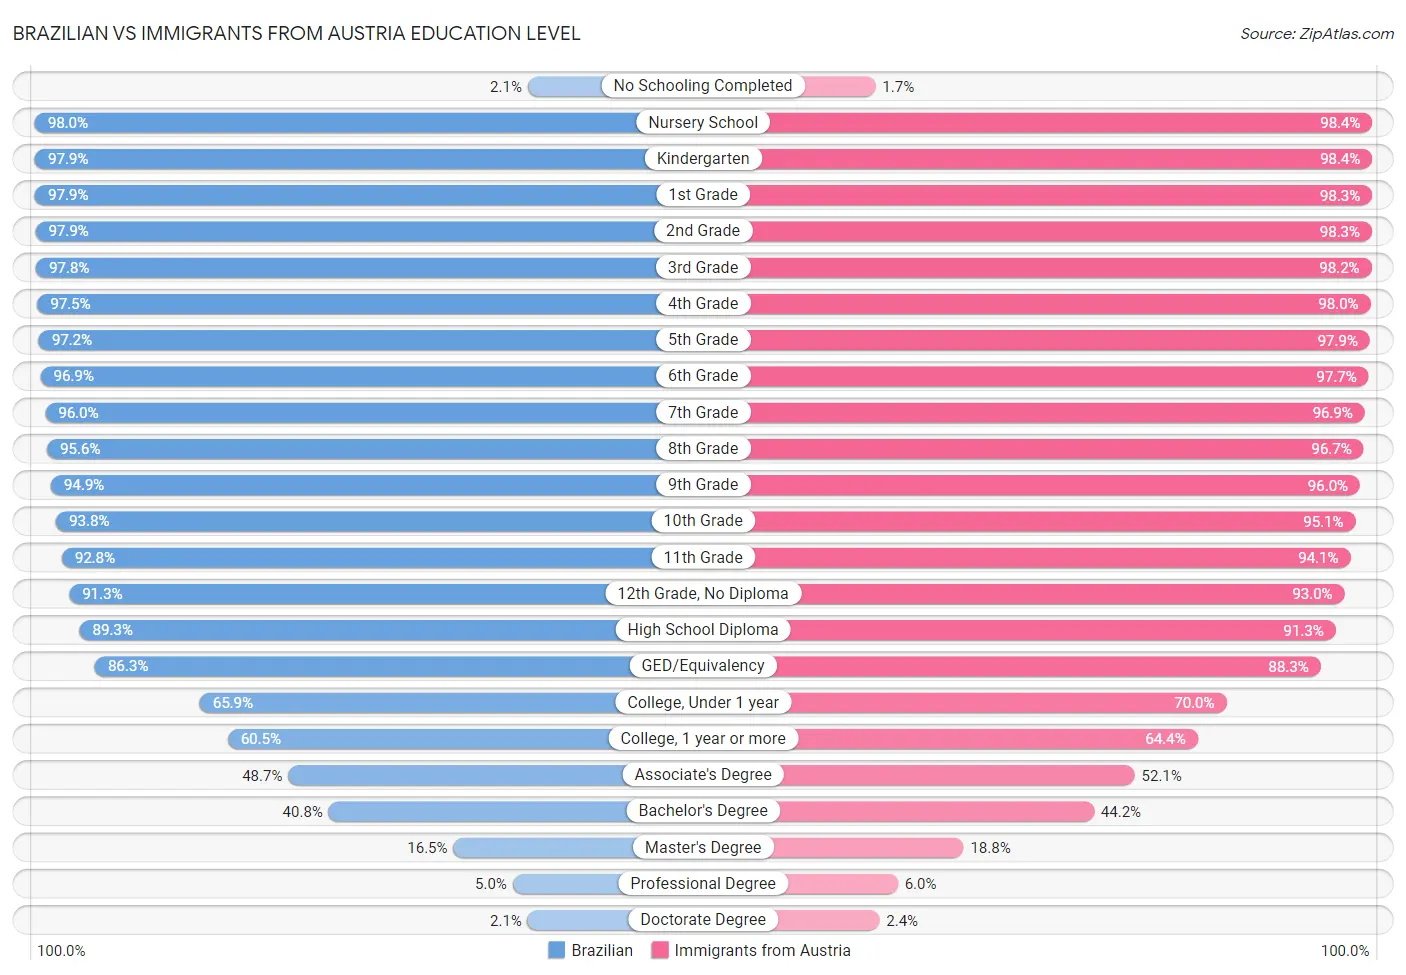 Brazilian vs Immigrants from Austria Education Level